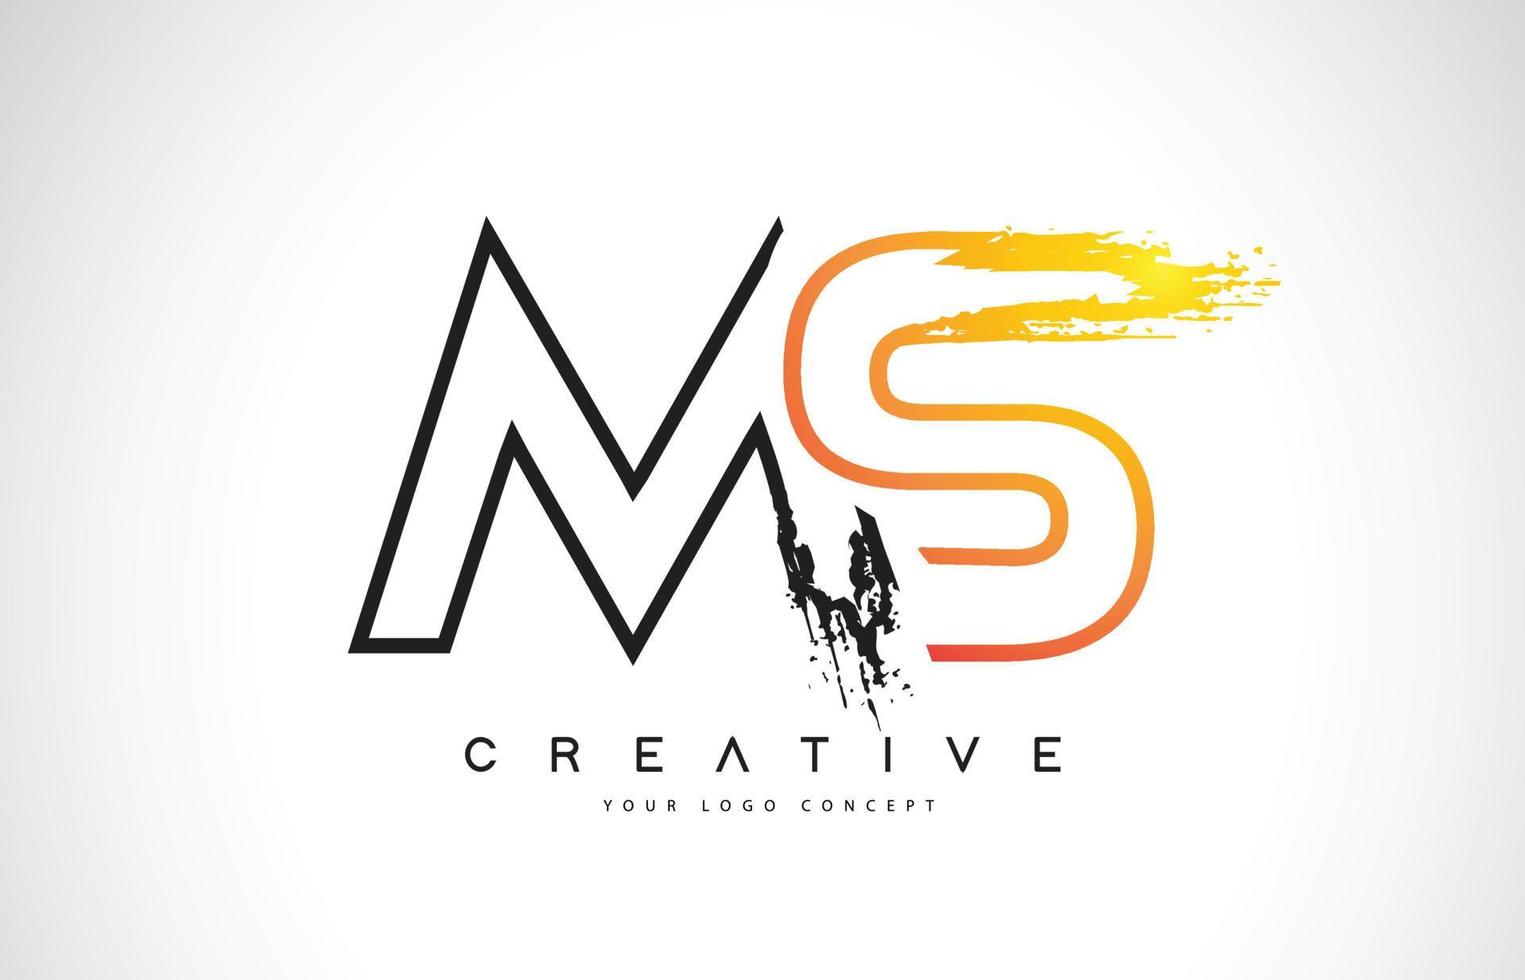 MS Creative Modern Logo Design with Orange and Black Colors. Monogram Stroke Letter Design. vector